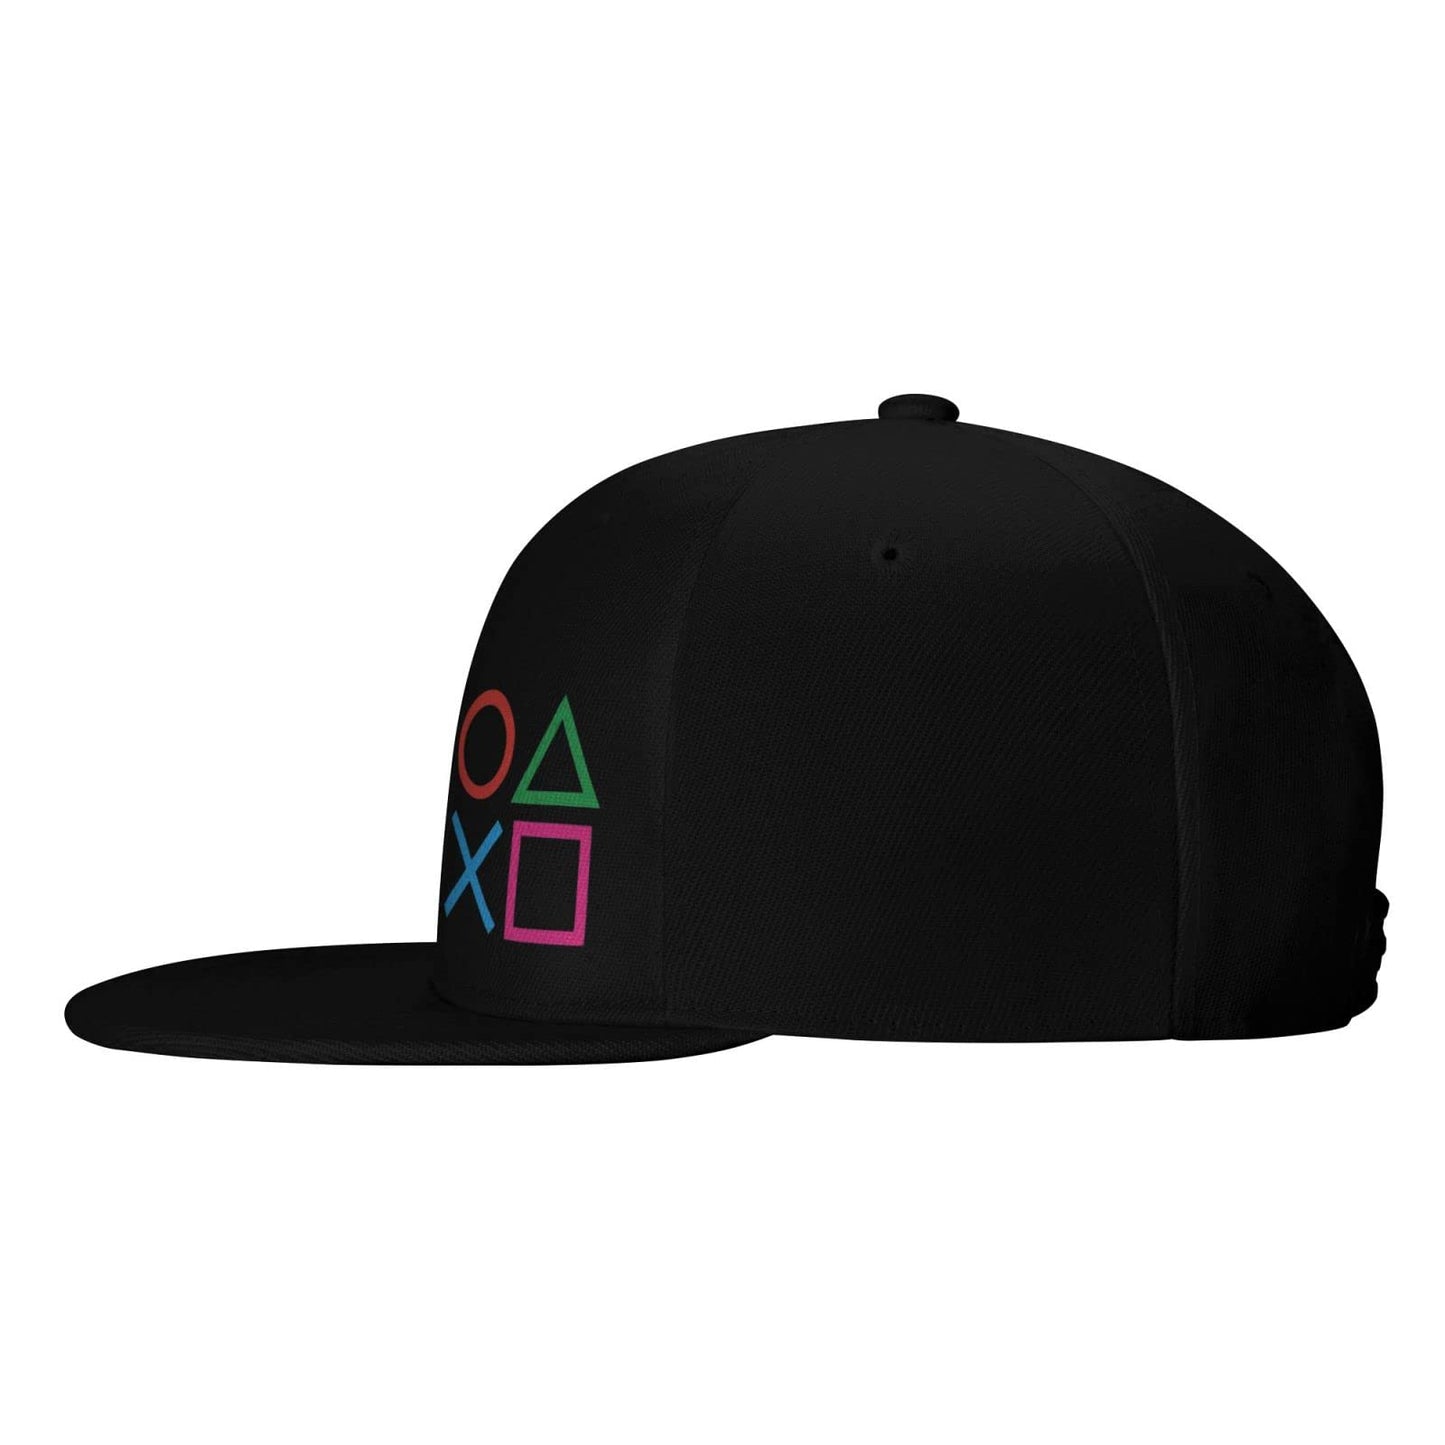 swqfzki Gamer Hat Snapback Flat Bill Baseball Cap Men's Adjustable Gamers Gift Trucker Hats Black - amzGamess